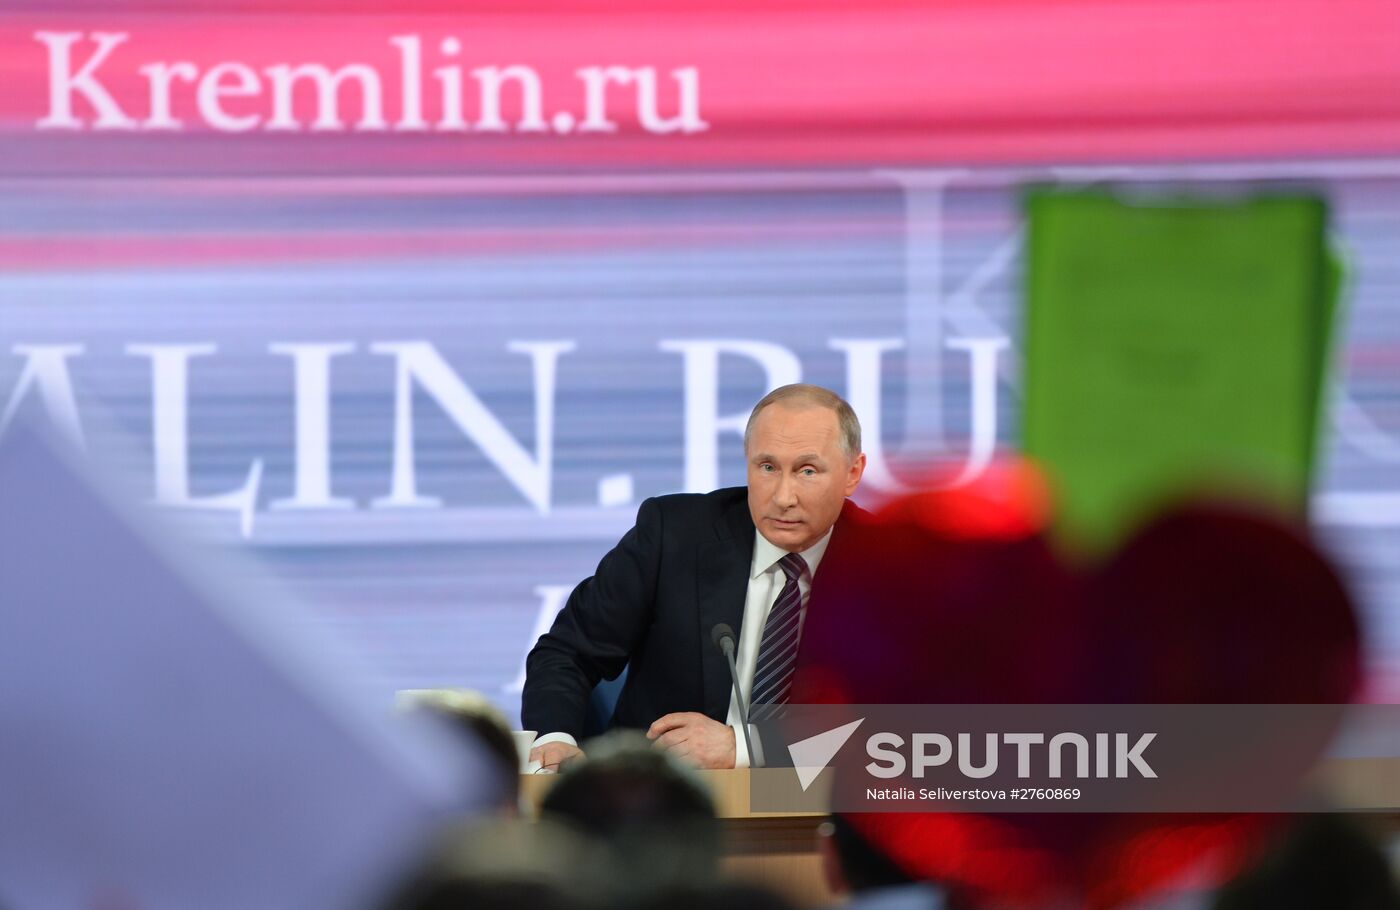 President Putin's 11th annual press conference